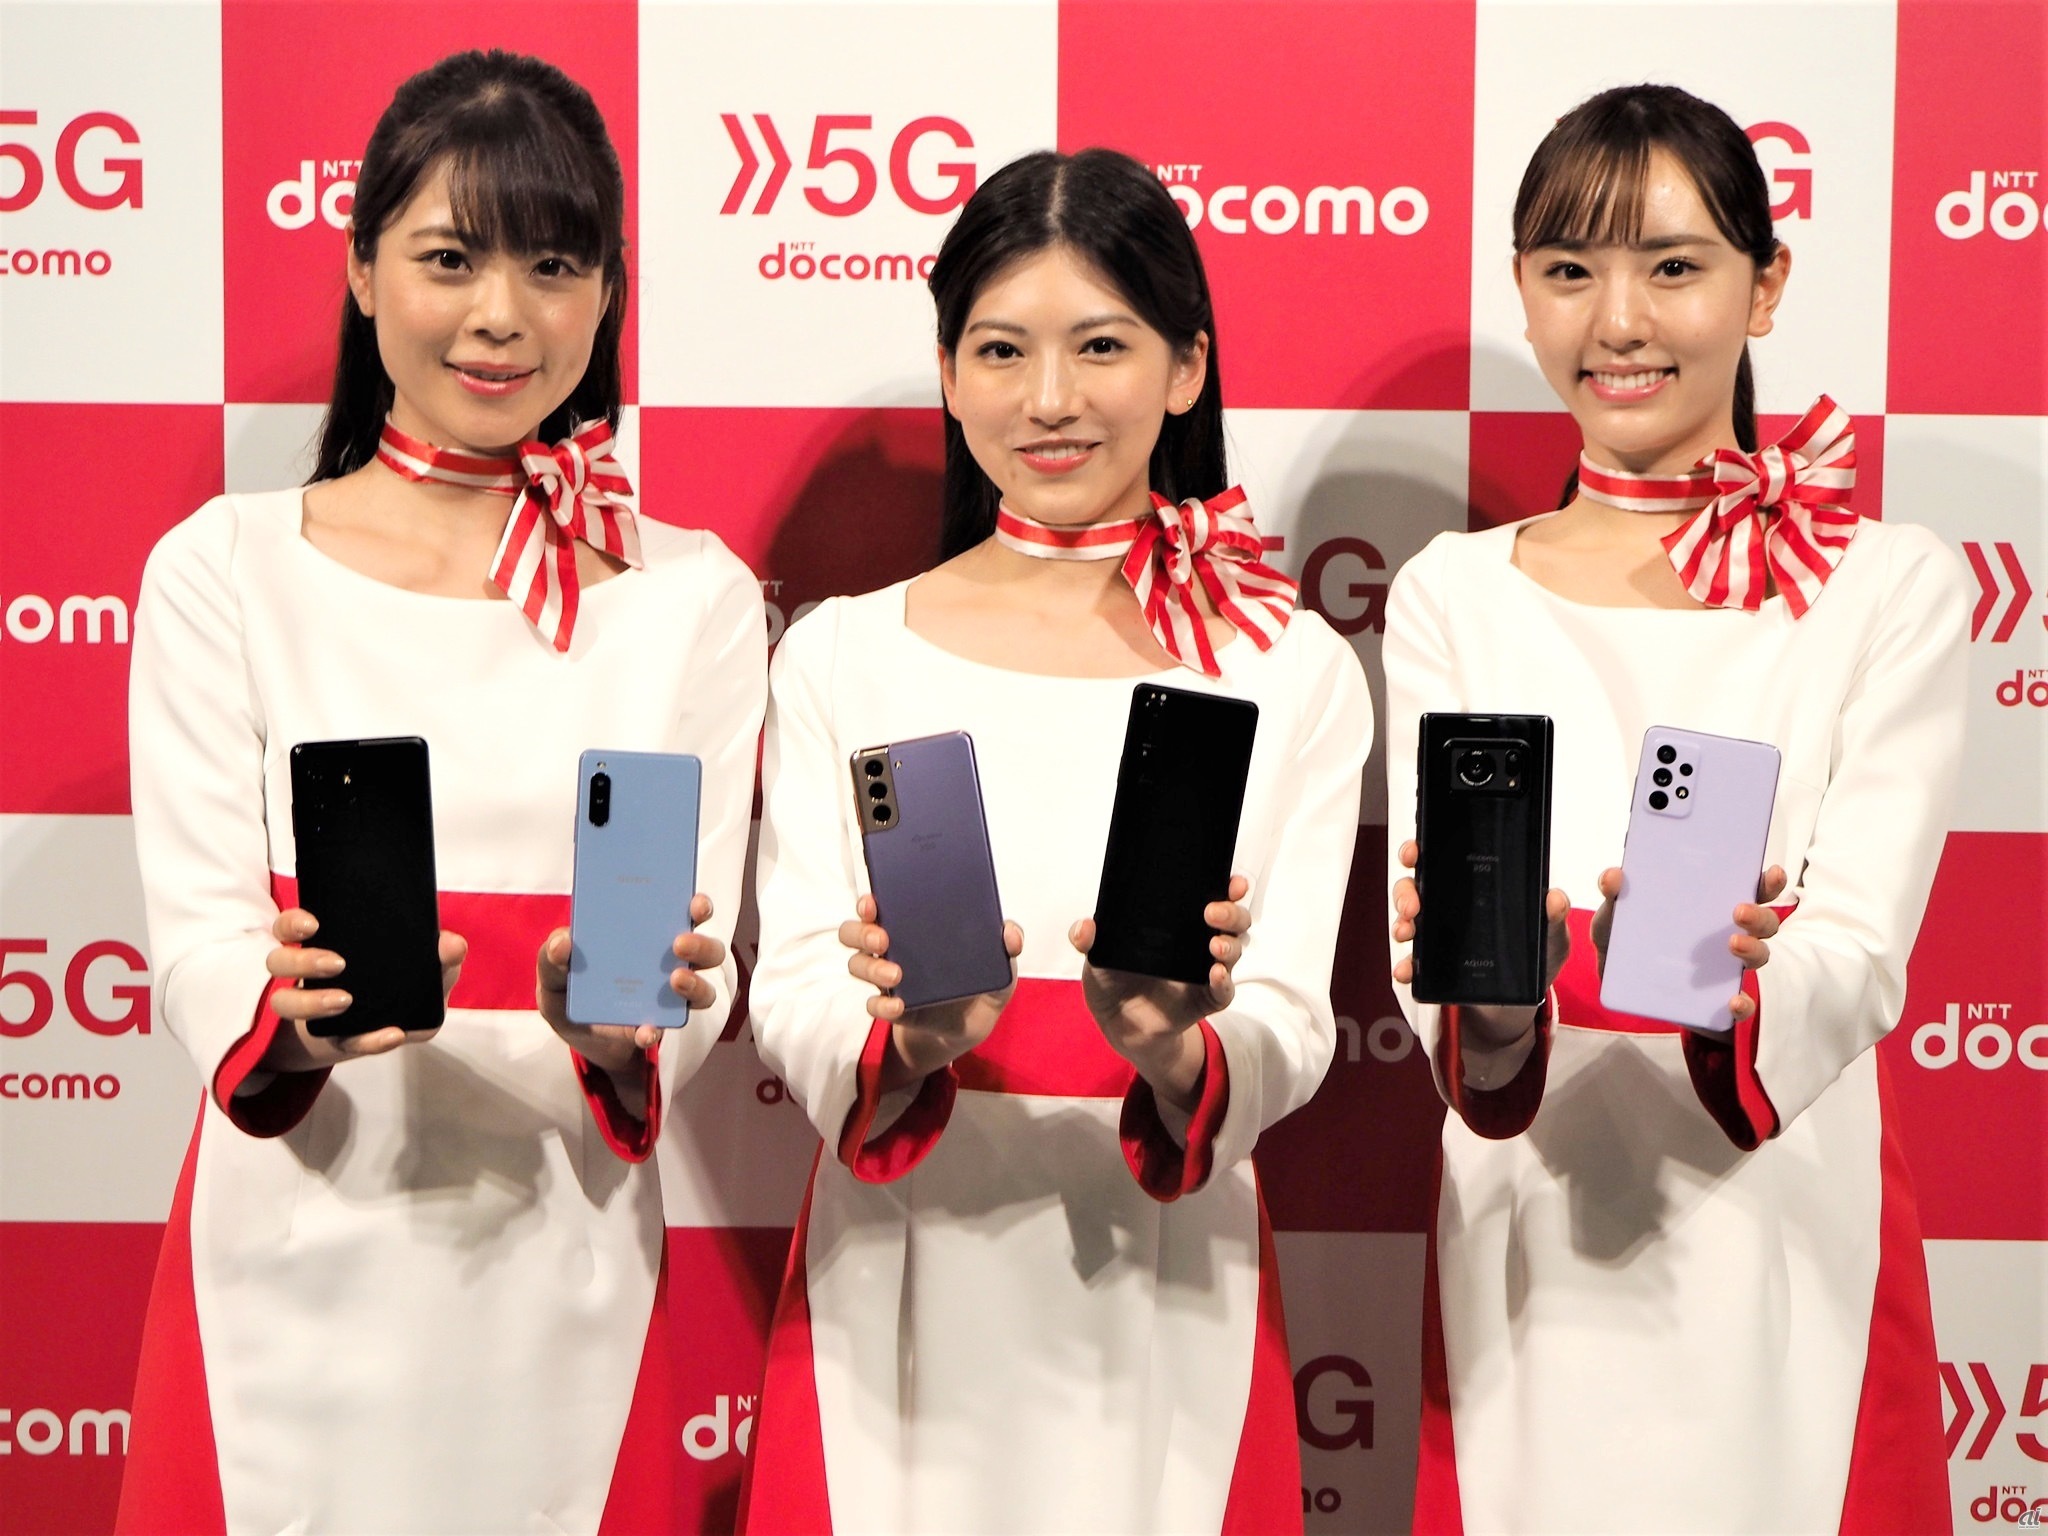 NTTドコモは2021年5月19日に新サービス・新商品発表会を実施、夏商戦に向けたスマートフォン11機種や、3つの新たなサービスなどを発表した